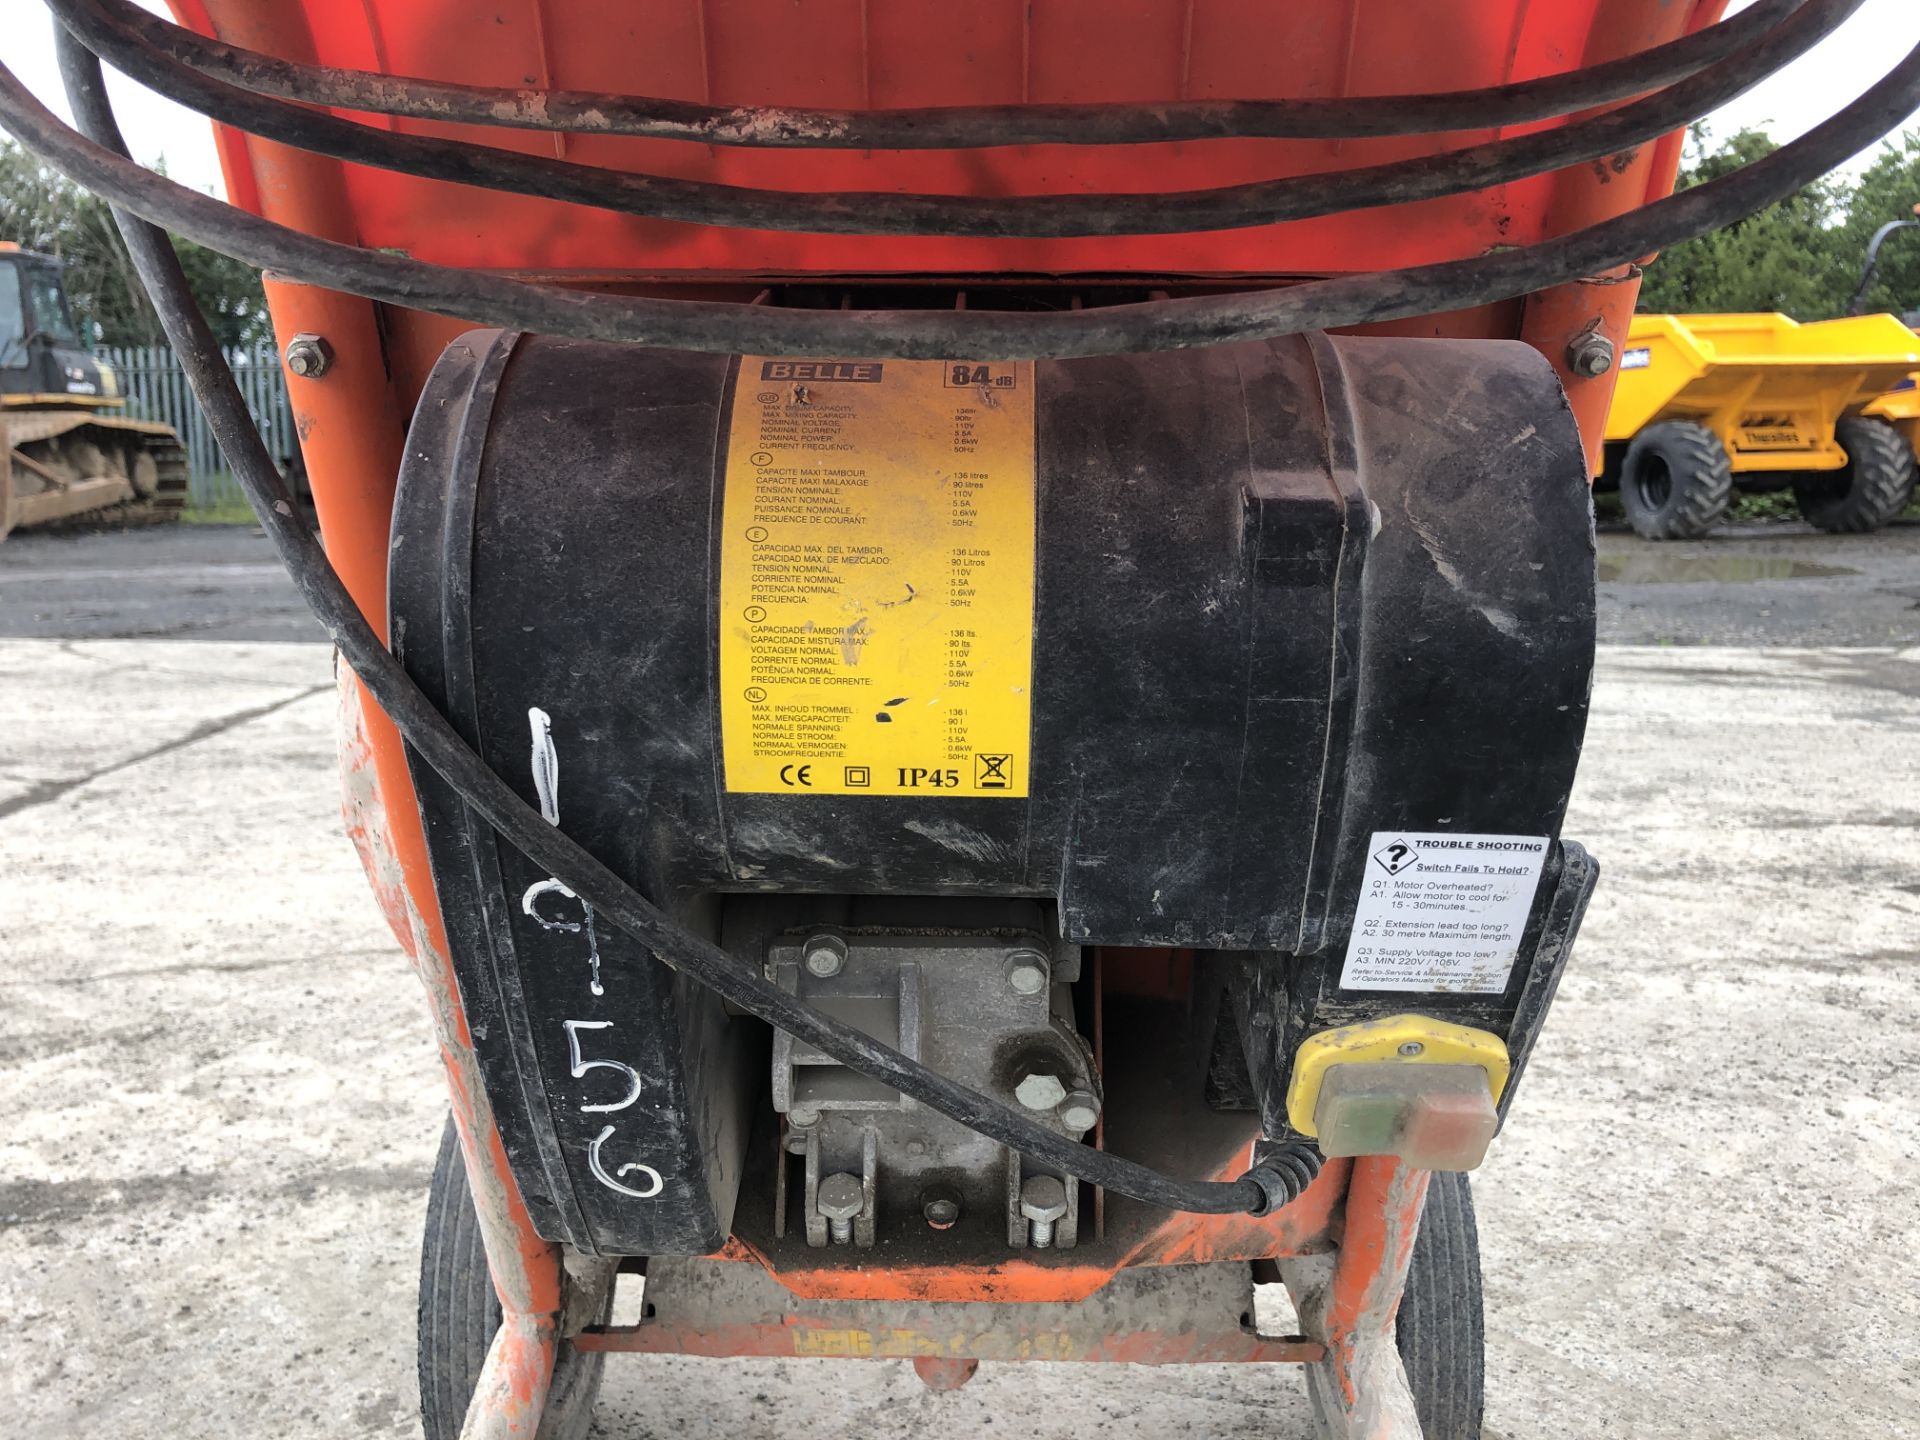 PL-15022 Belle 110v Cement Mixer - Image 4 of 6